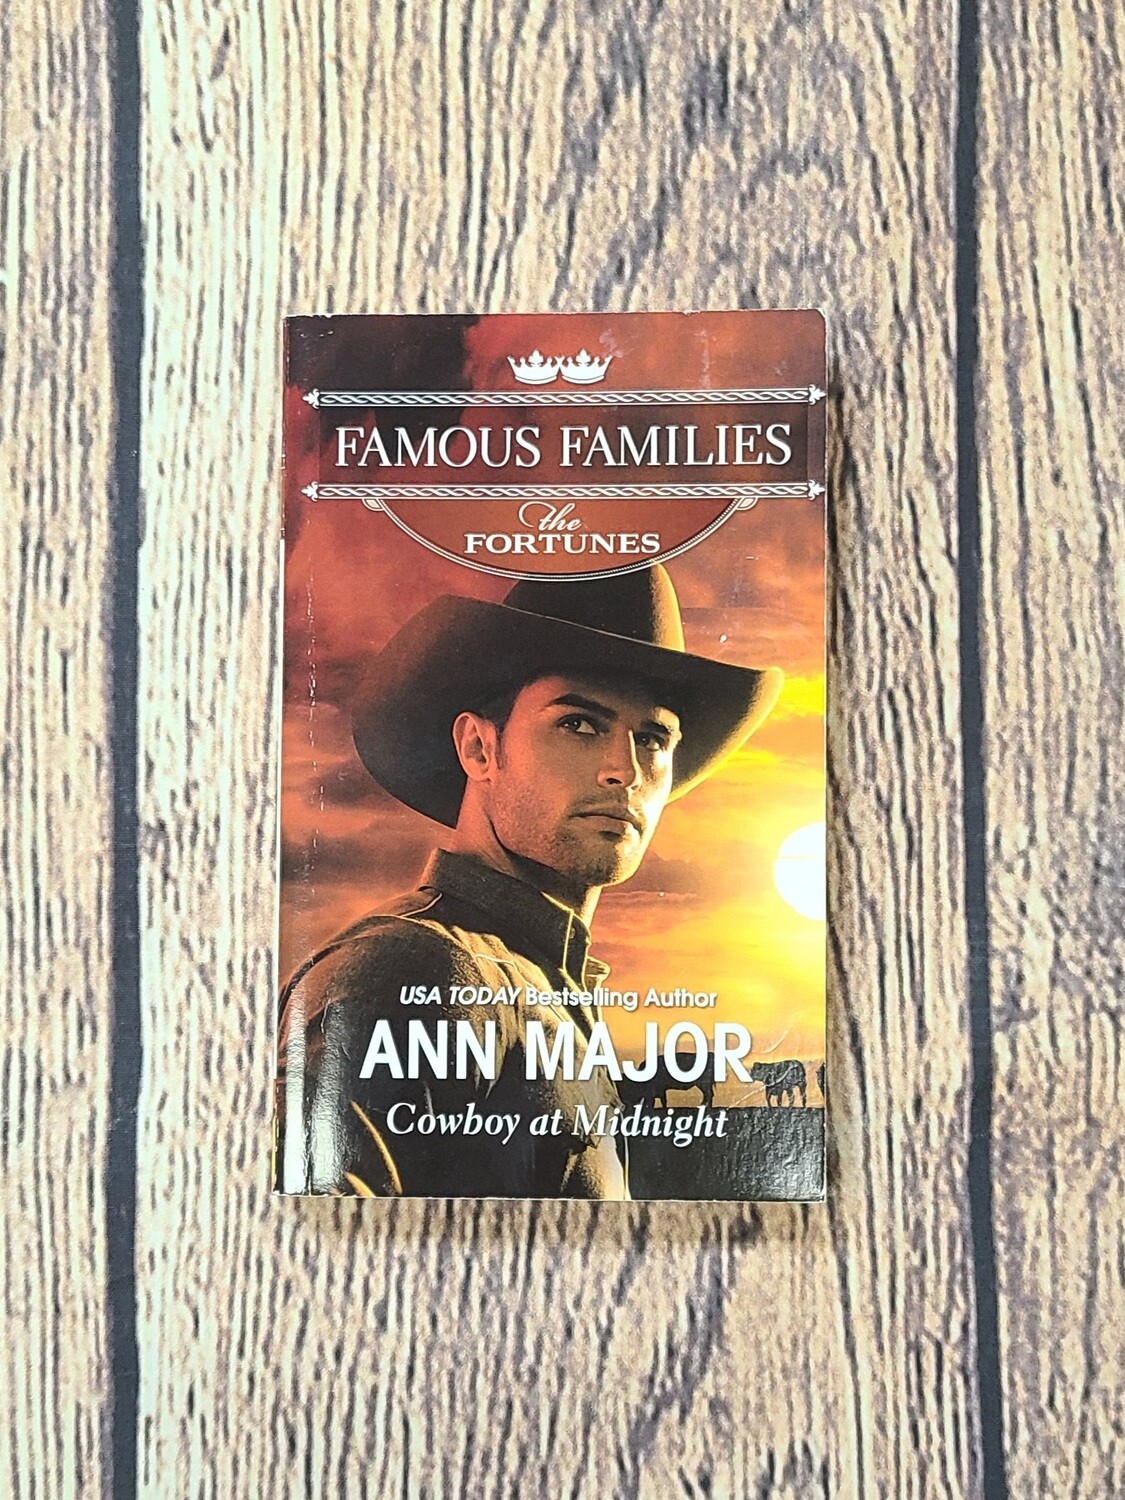 Cowboy at Midnight by Ann Major